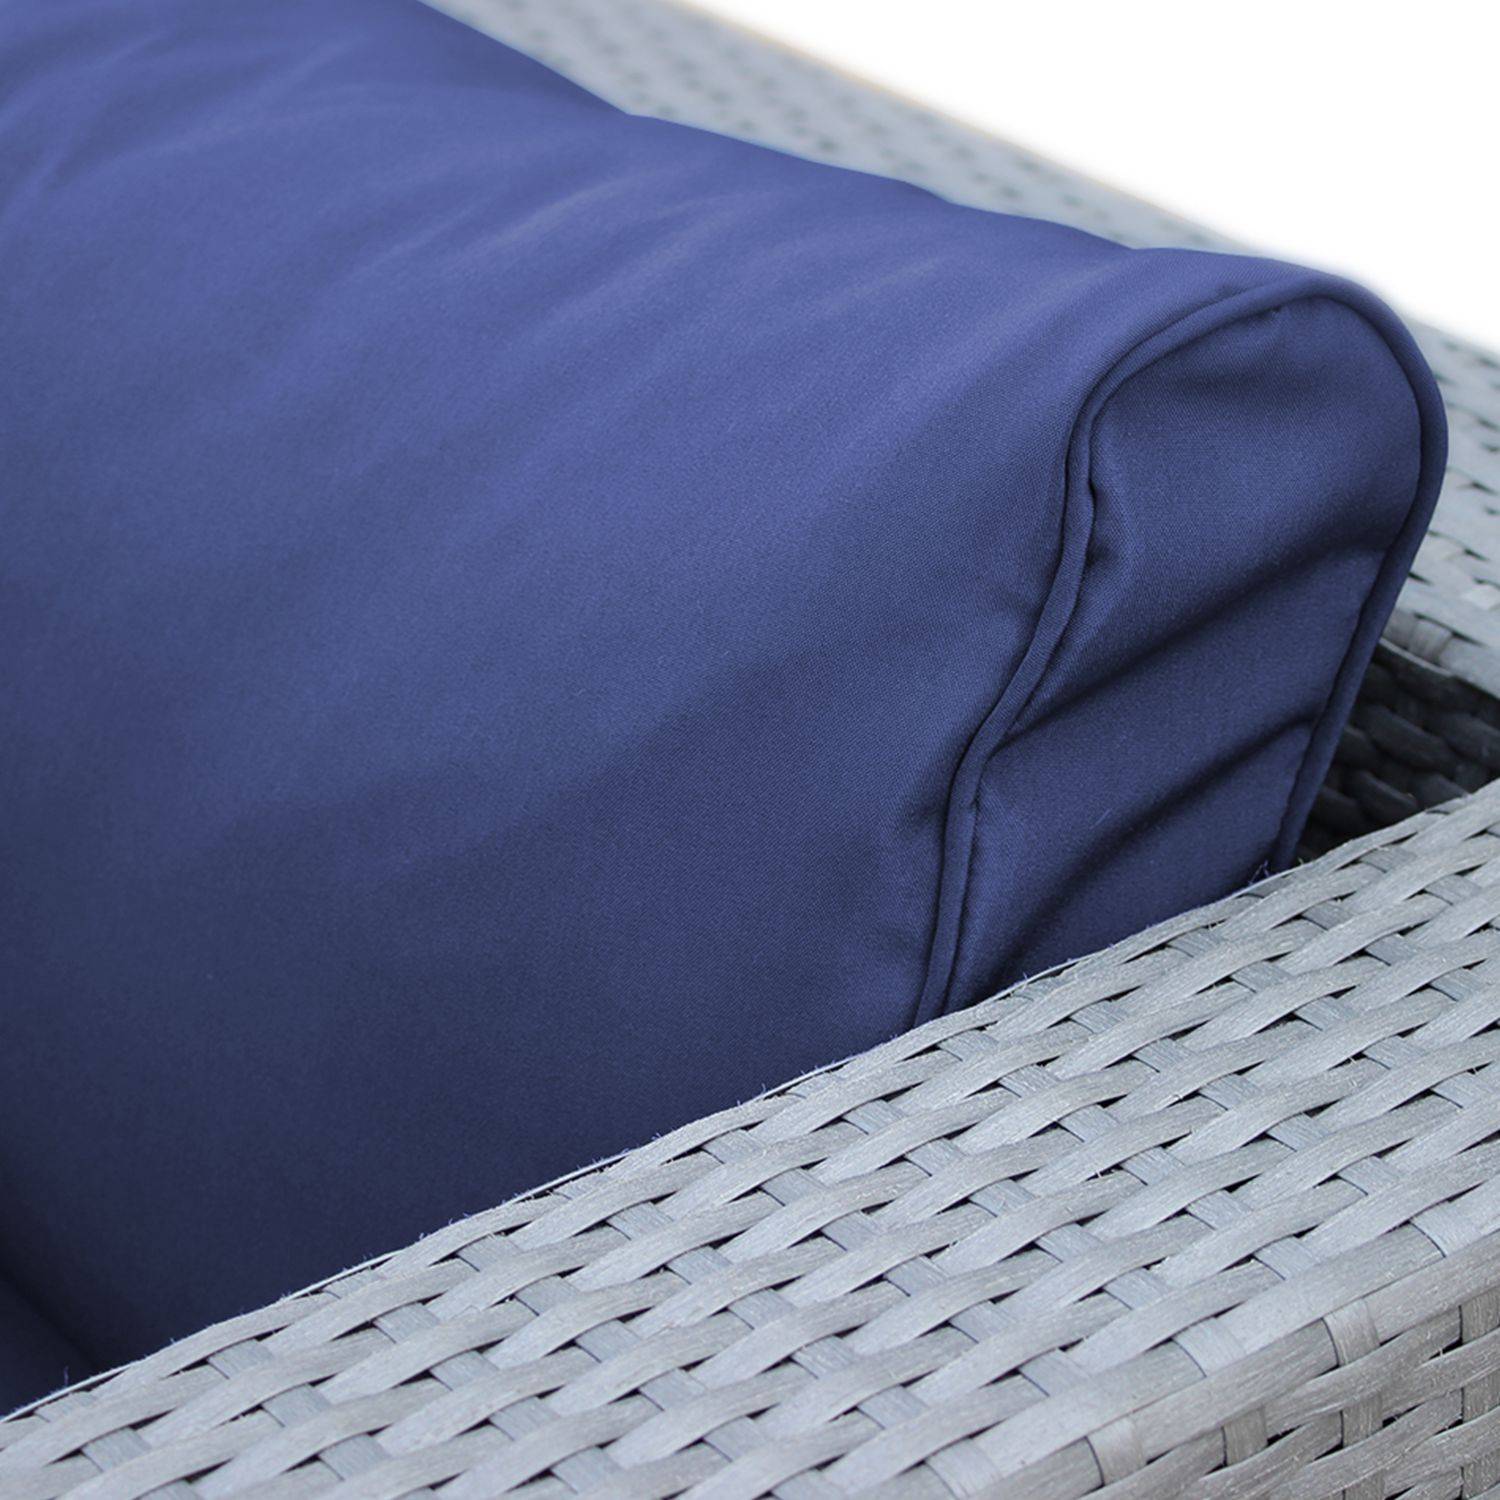 Blue cushion cover set for Napoli garden set - complete set Photo6